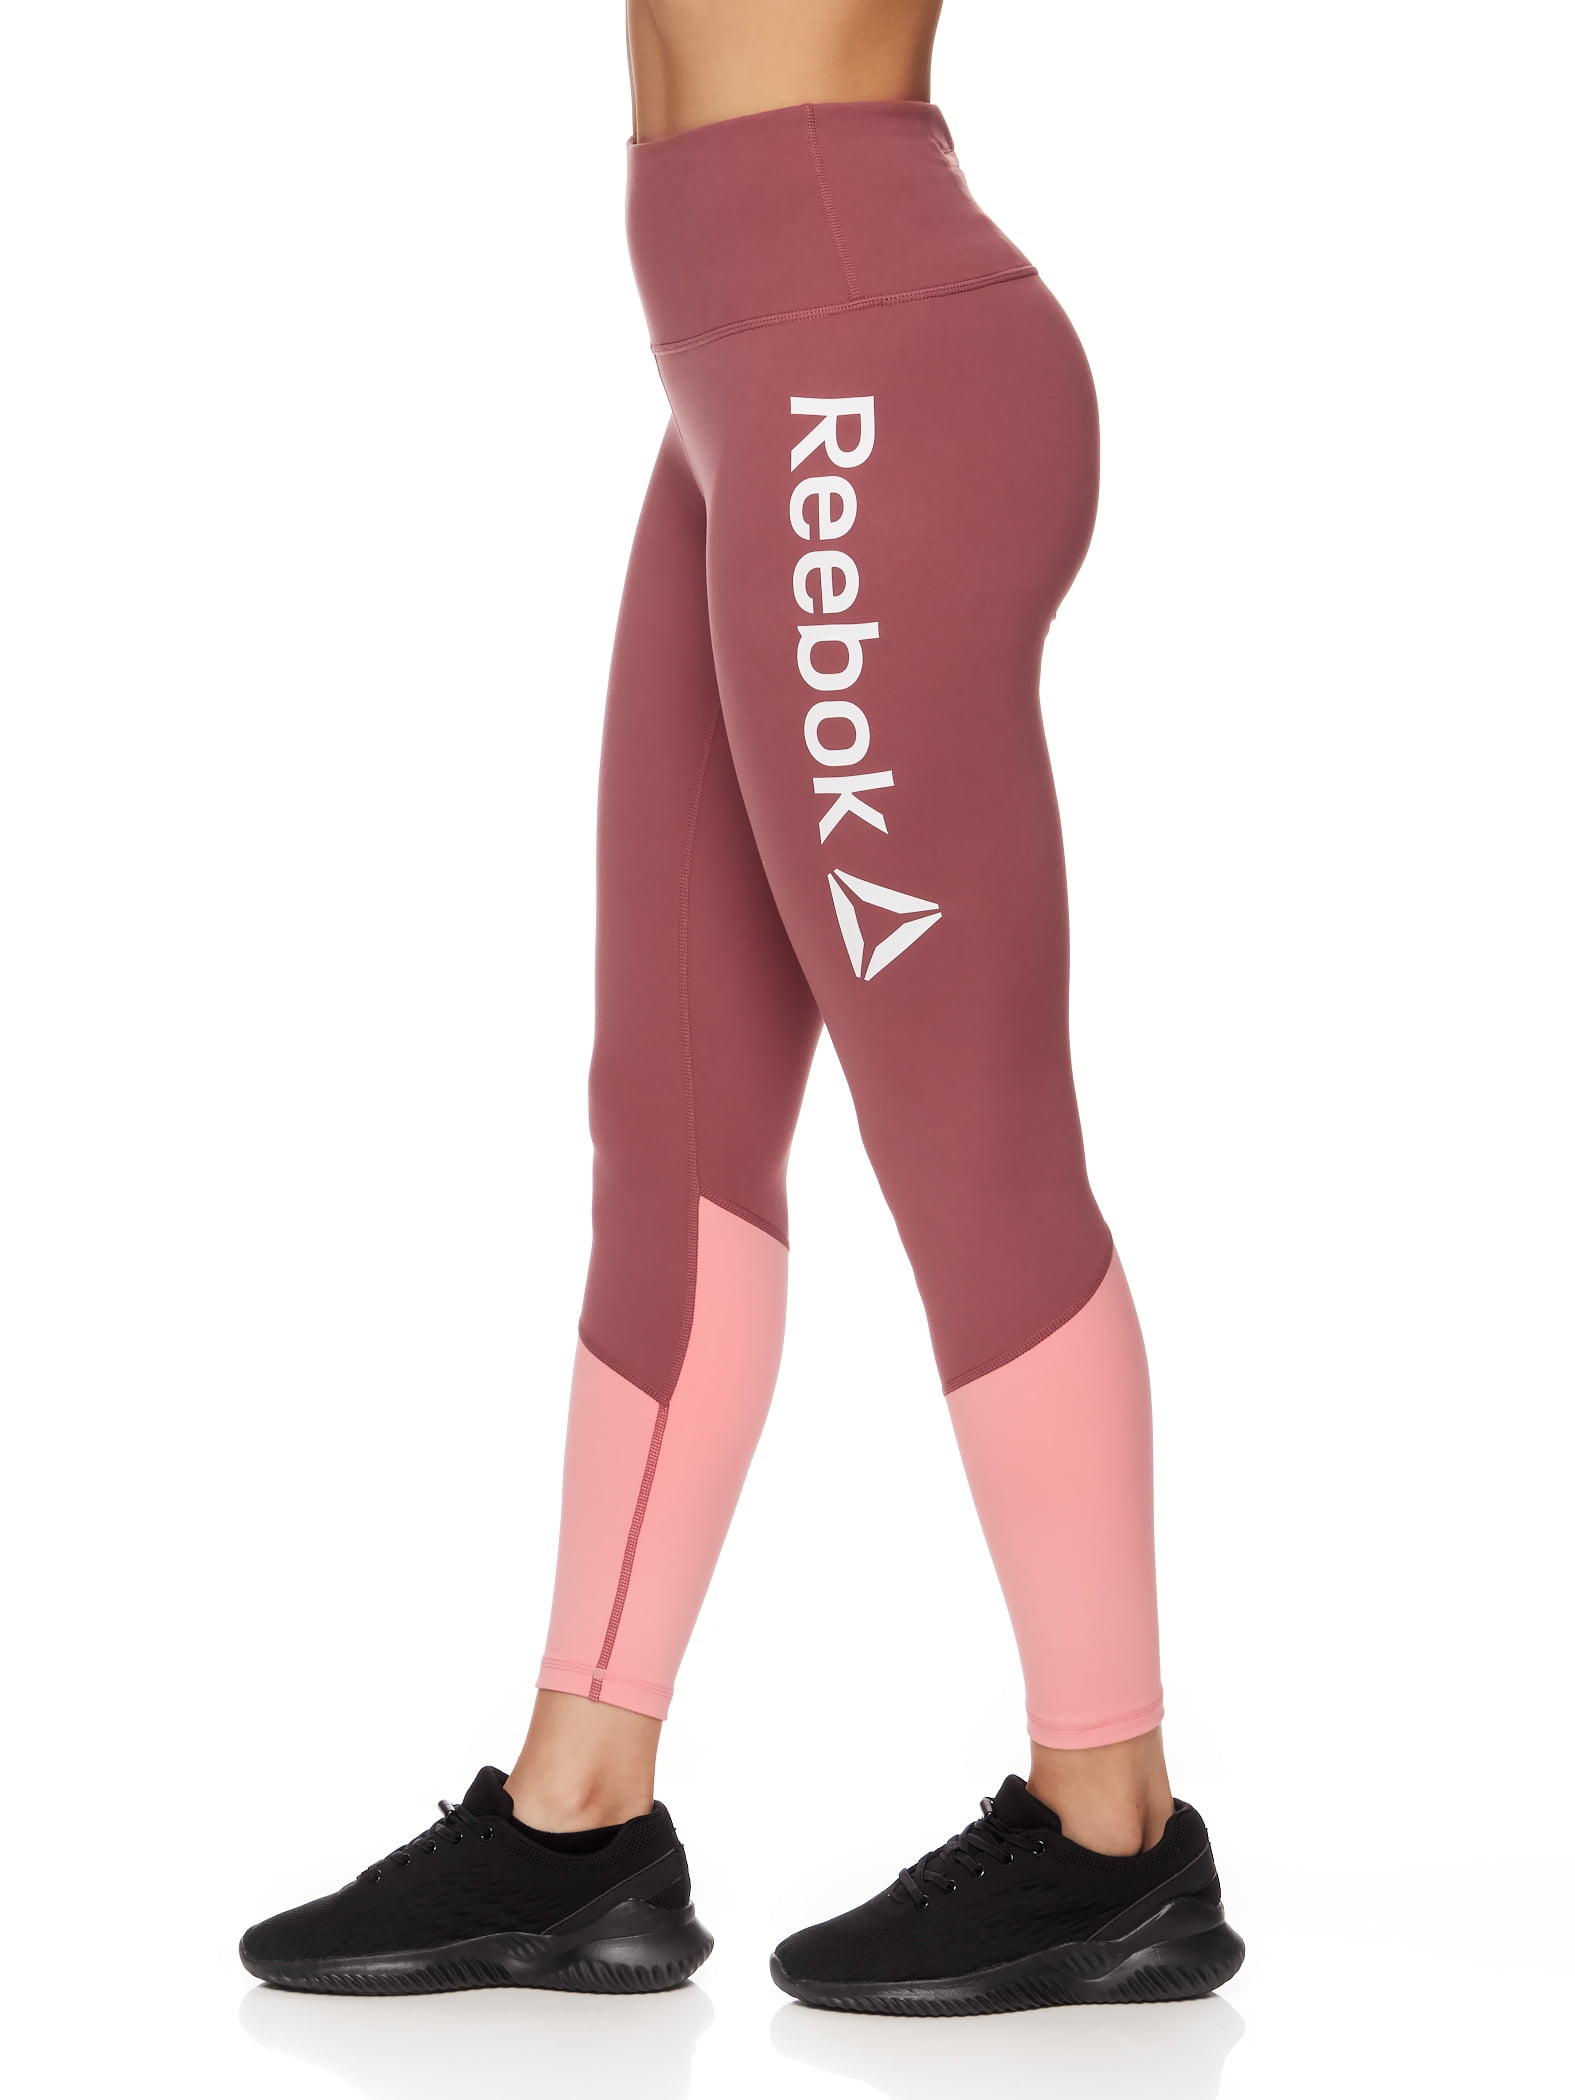 Reebok Women's Focus Highrise 7/8 Legging with 25" Inseam and Back Zipper Pocket -